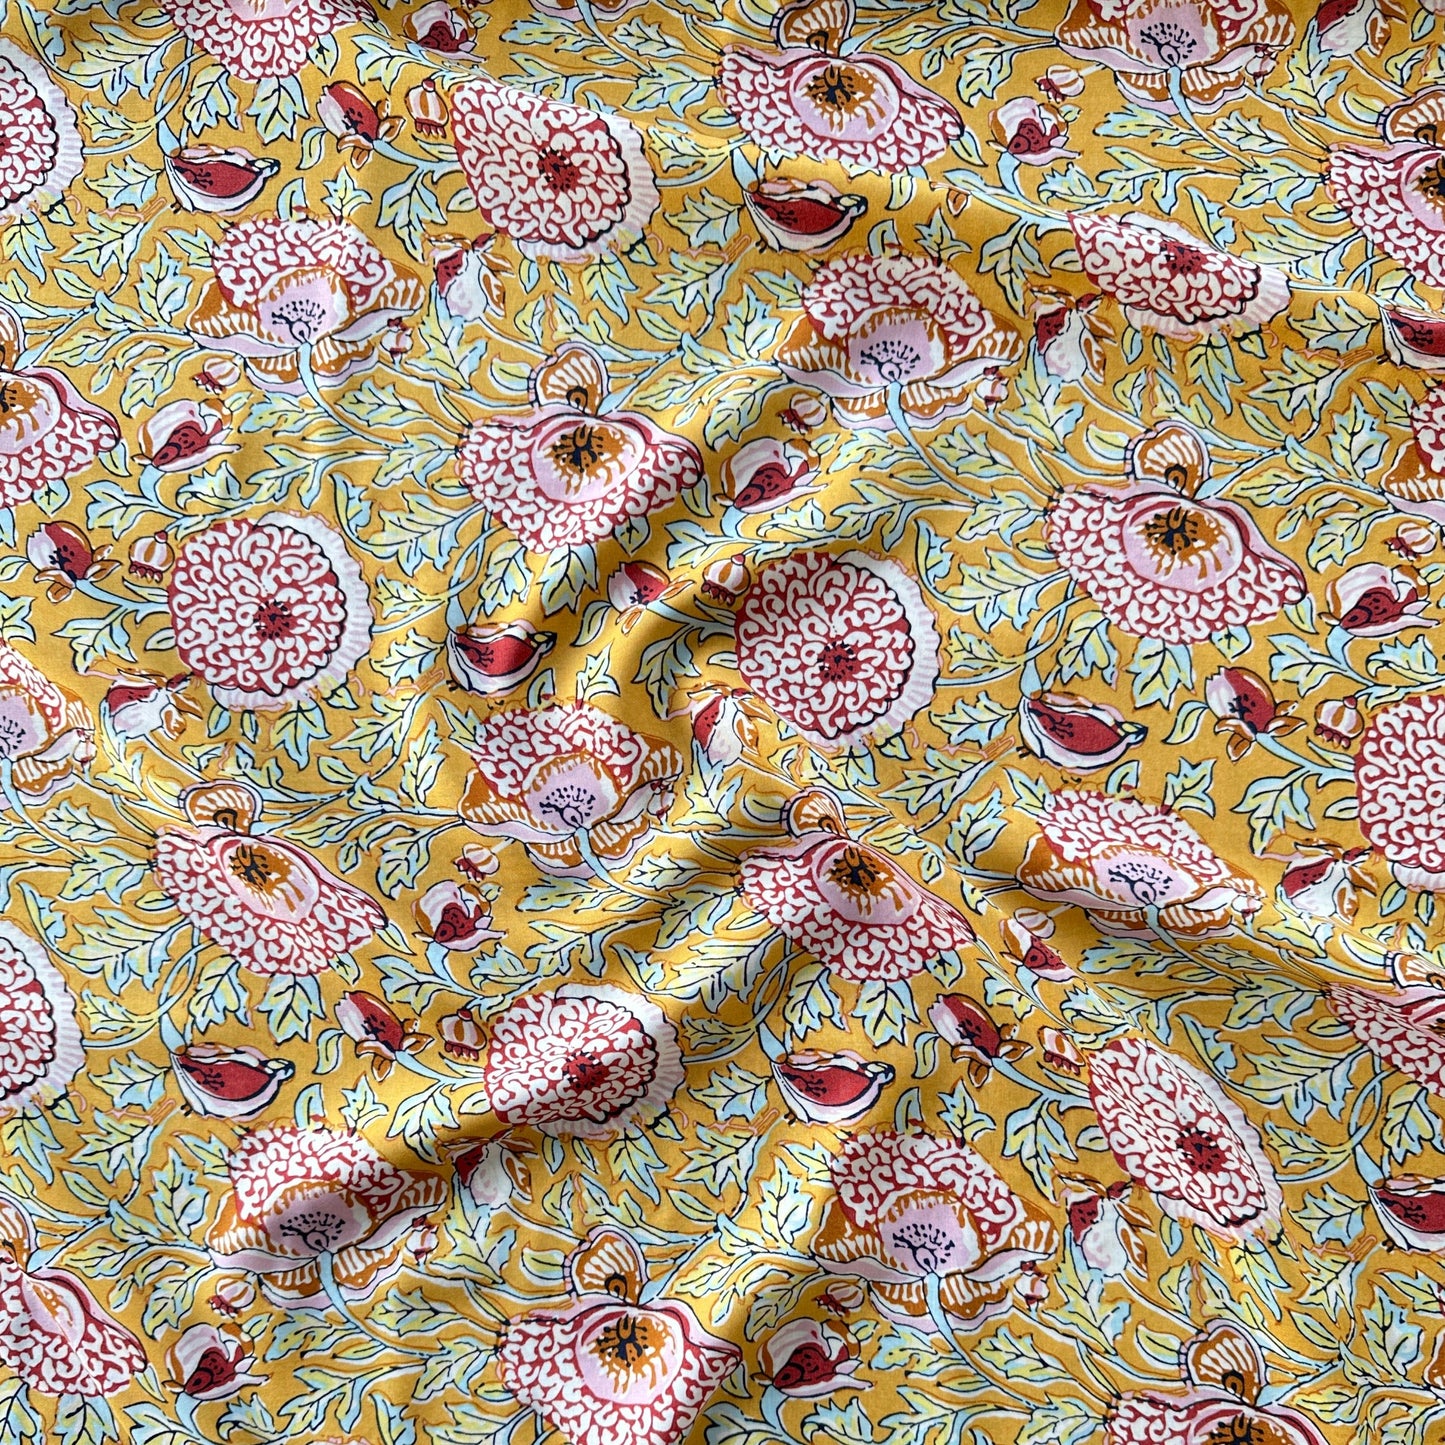 Andrea Tencel Lawn Fabric in Mustard